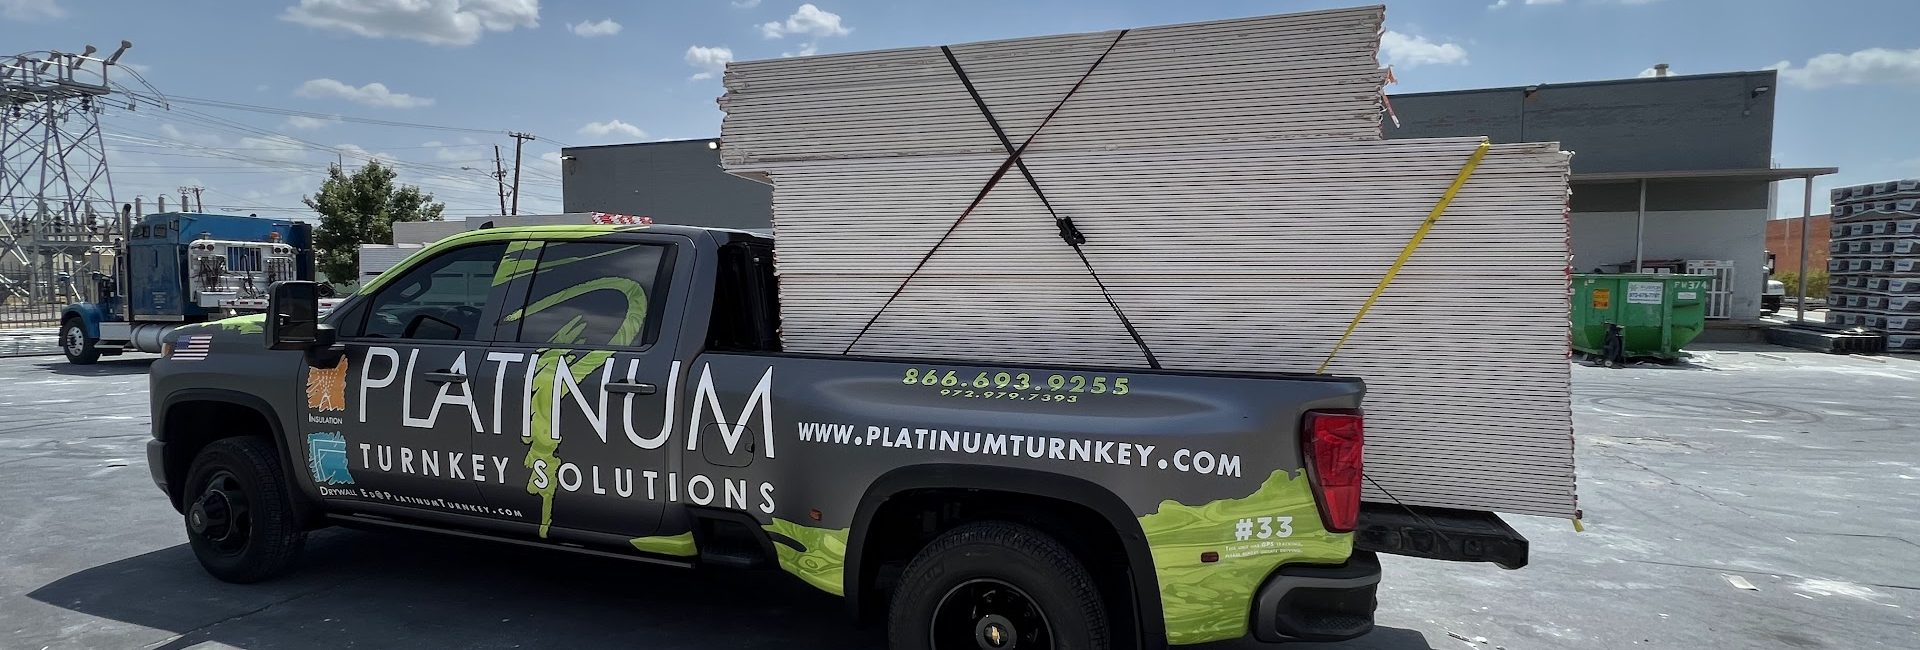 Platinum Turnkey Solutions 6